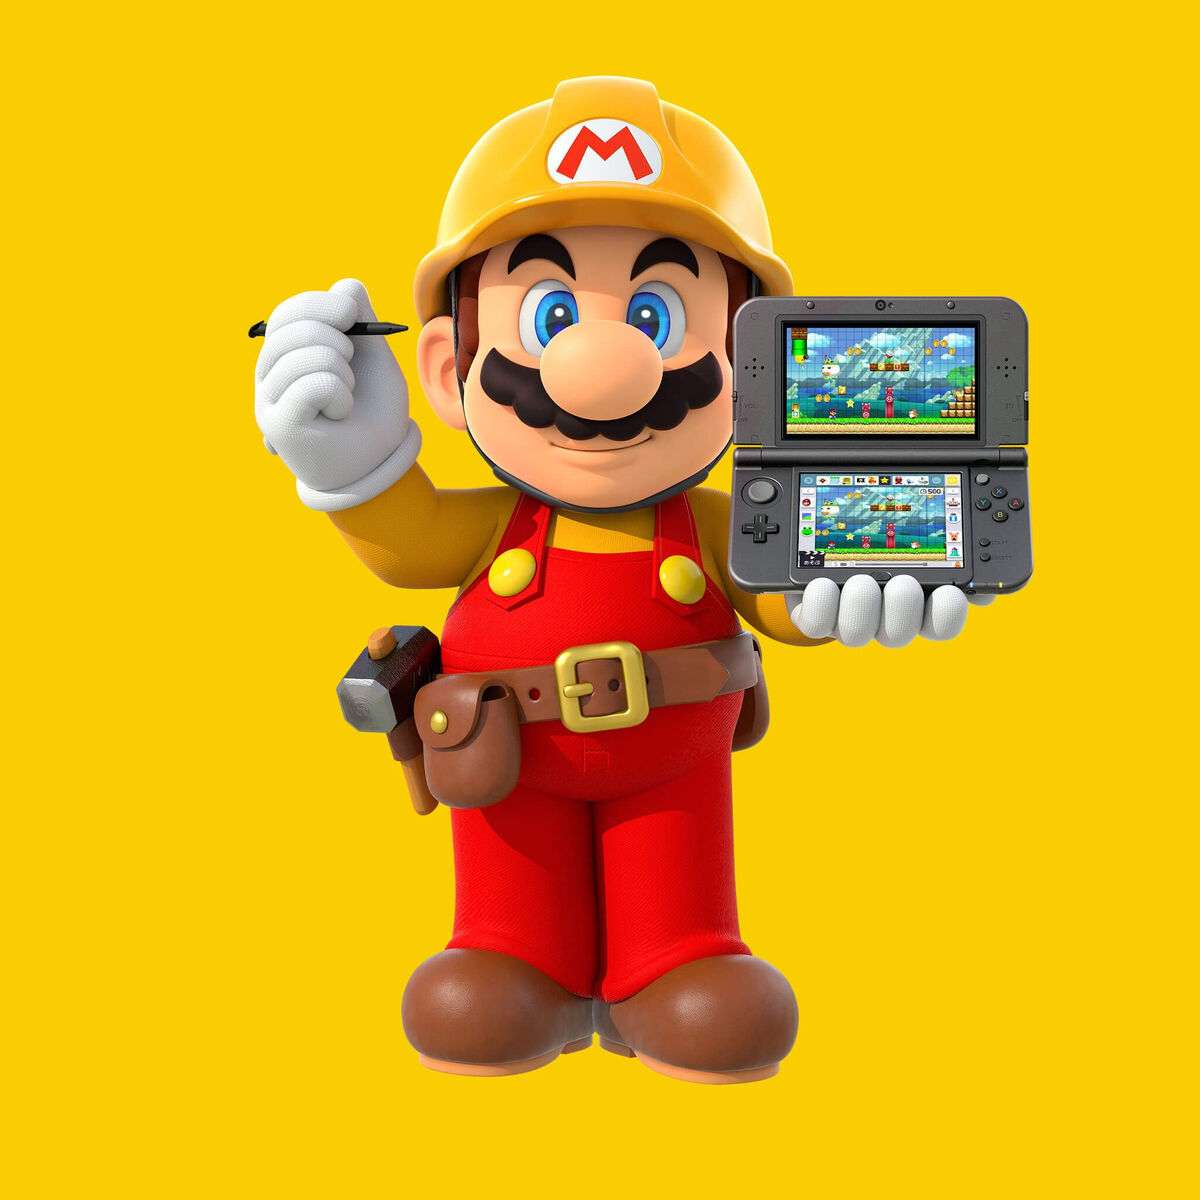 Super Mario Maker for 3DS Image